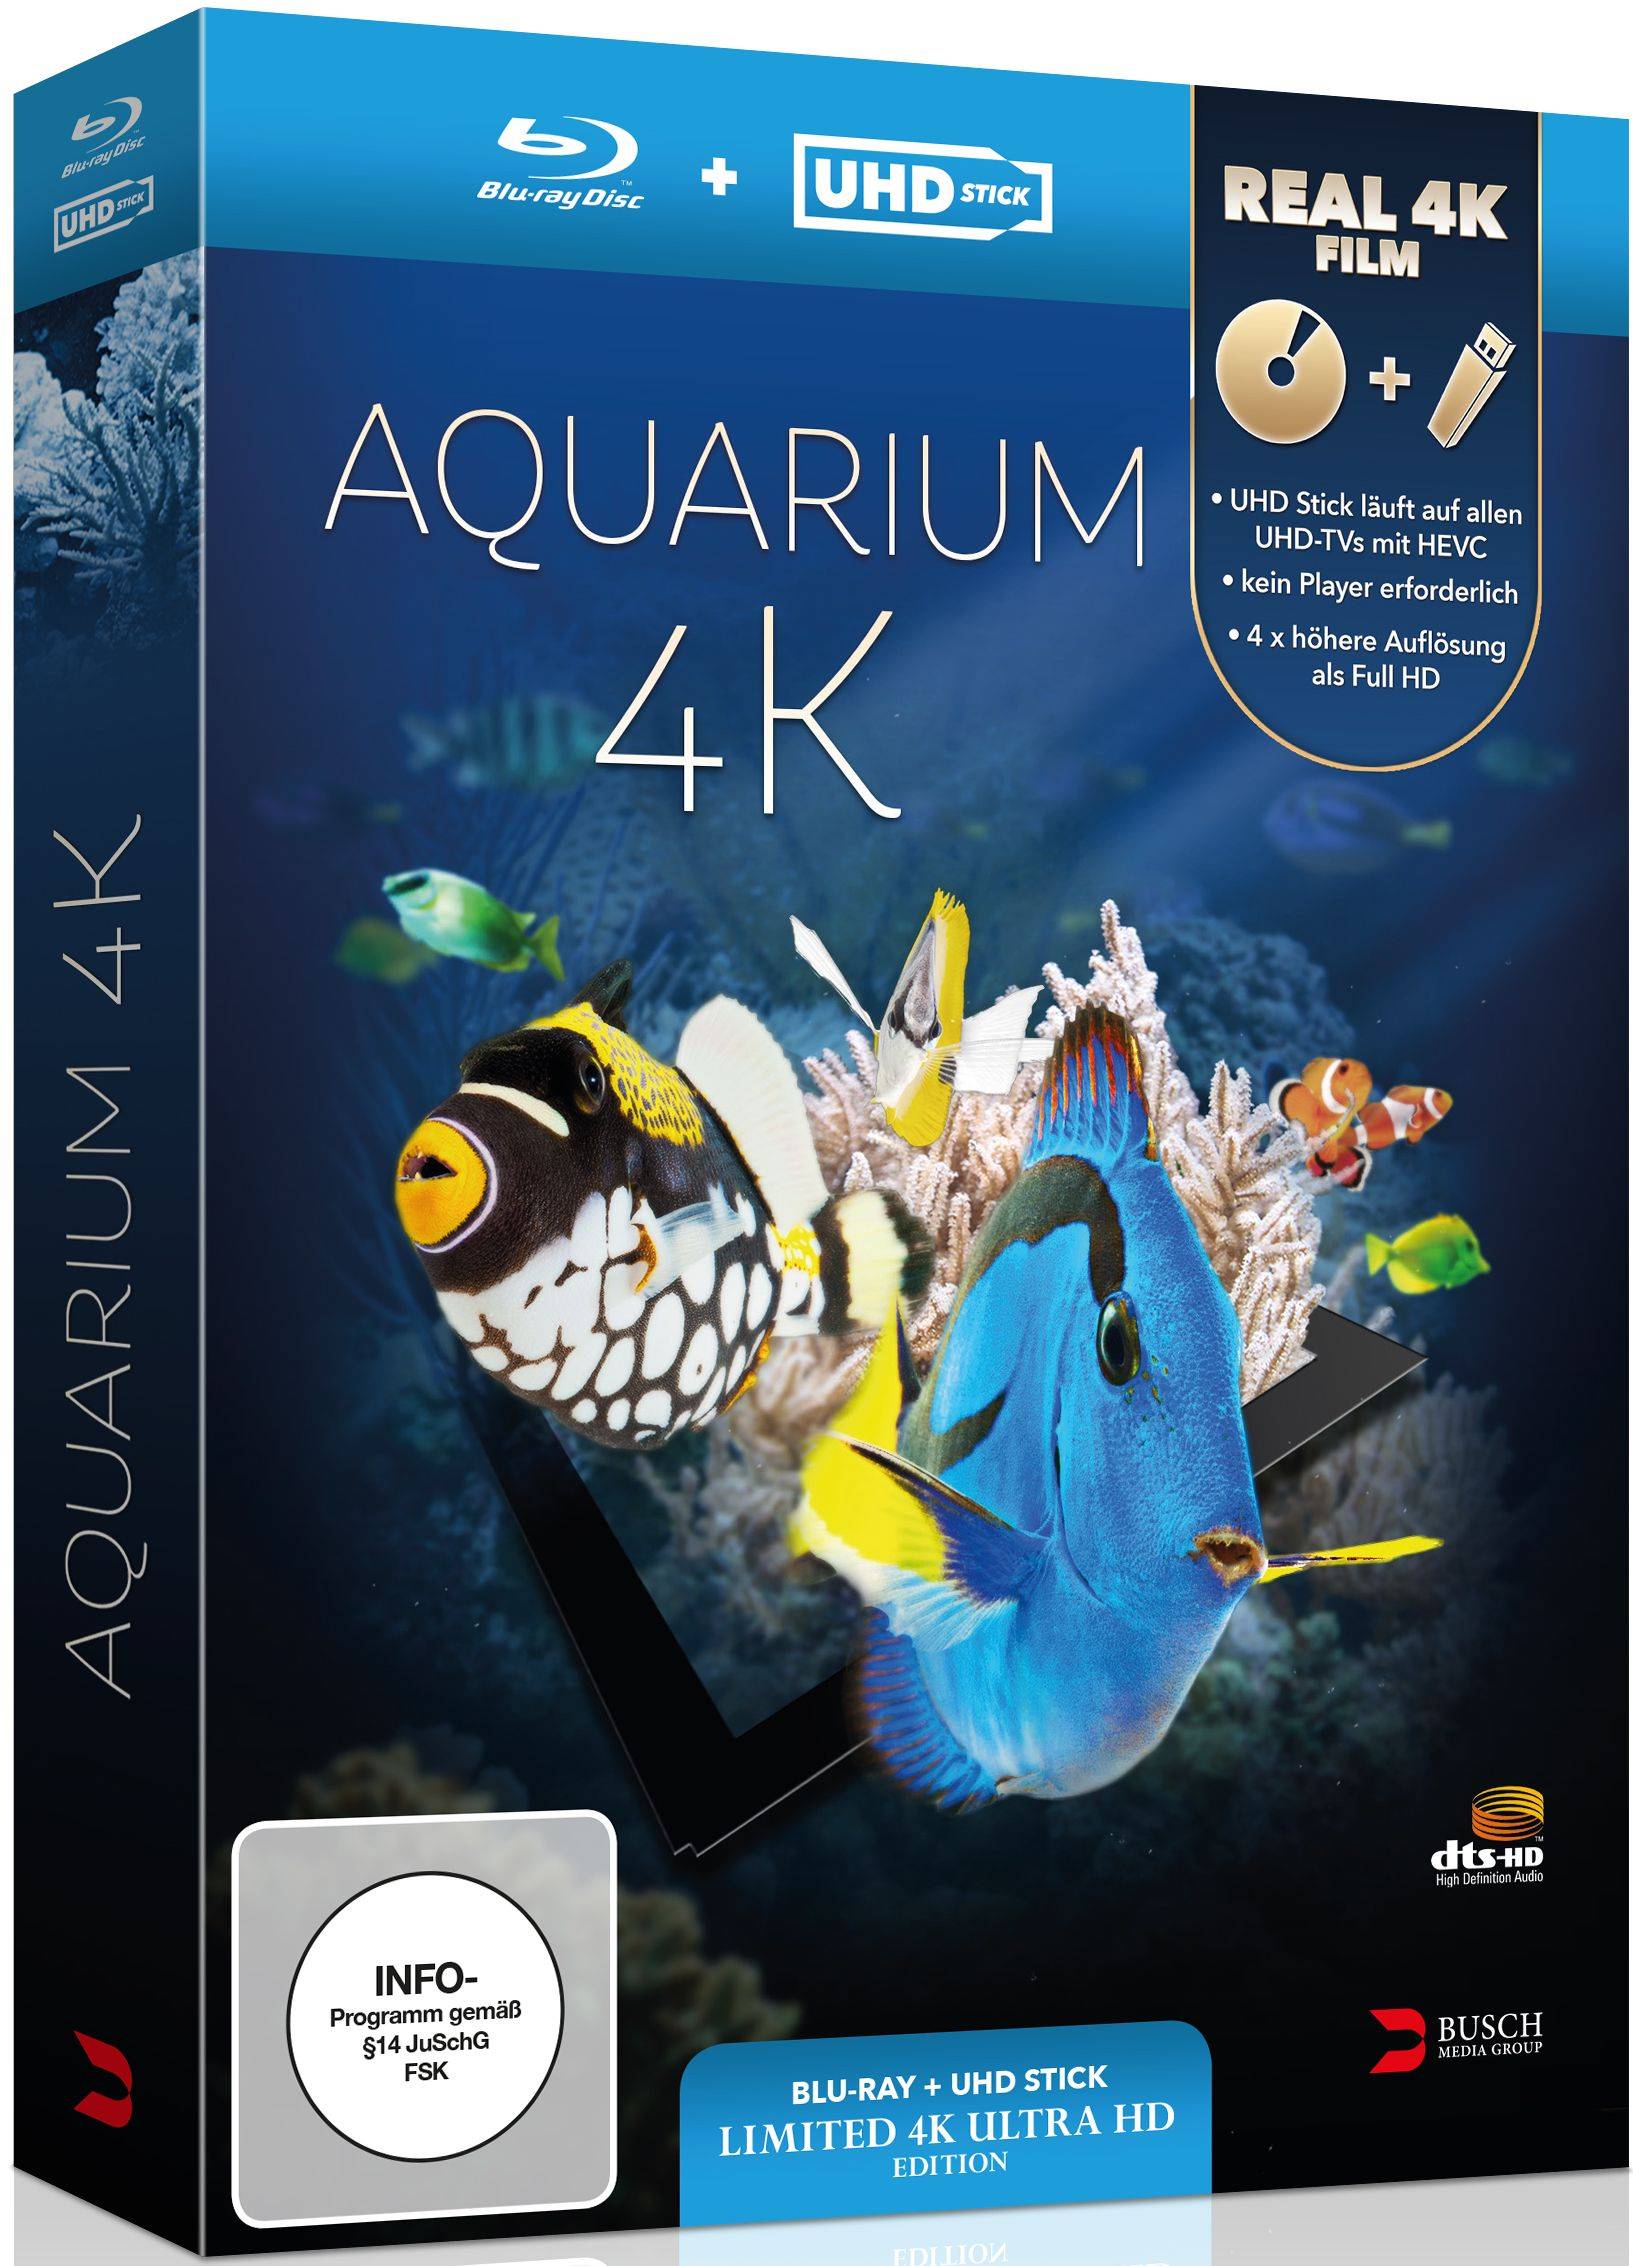 Aquarium 4K (UHD Stick in Real 4K + Blu-ray) - Limited Edition